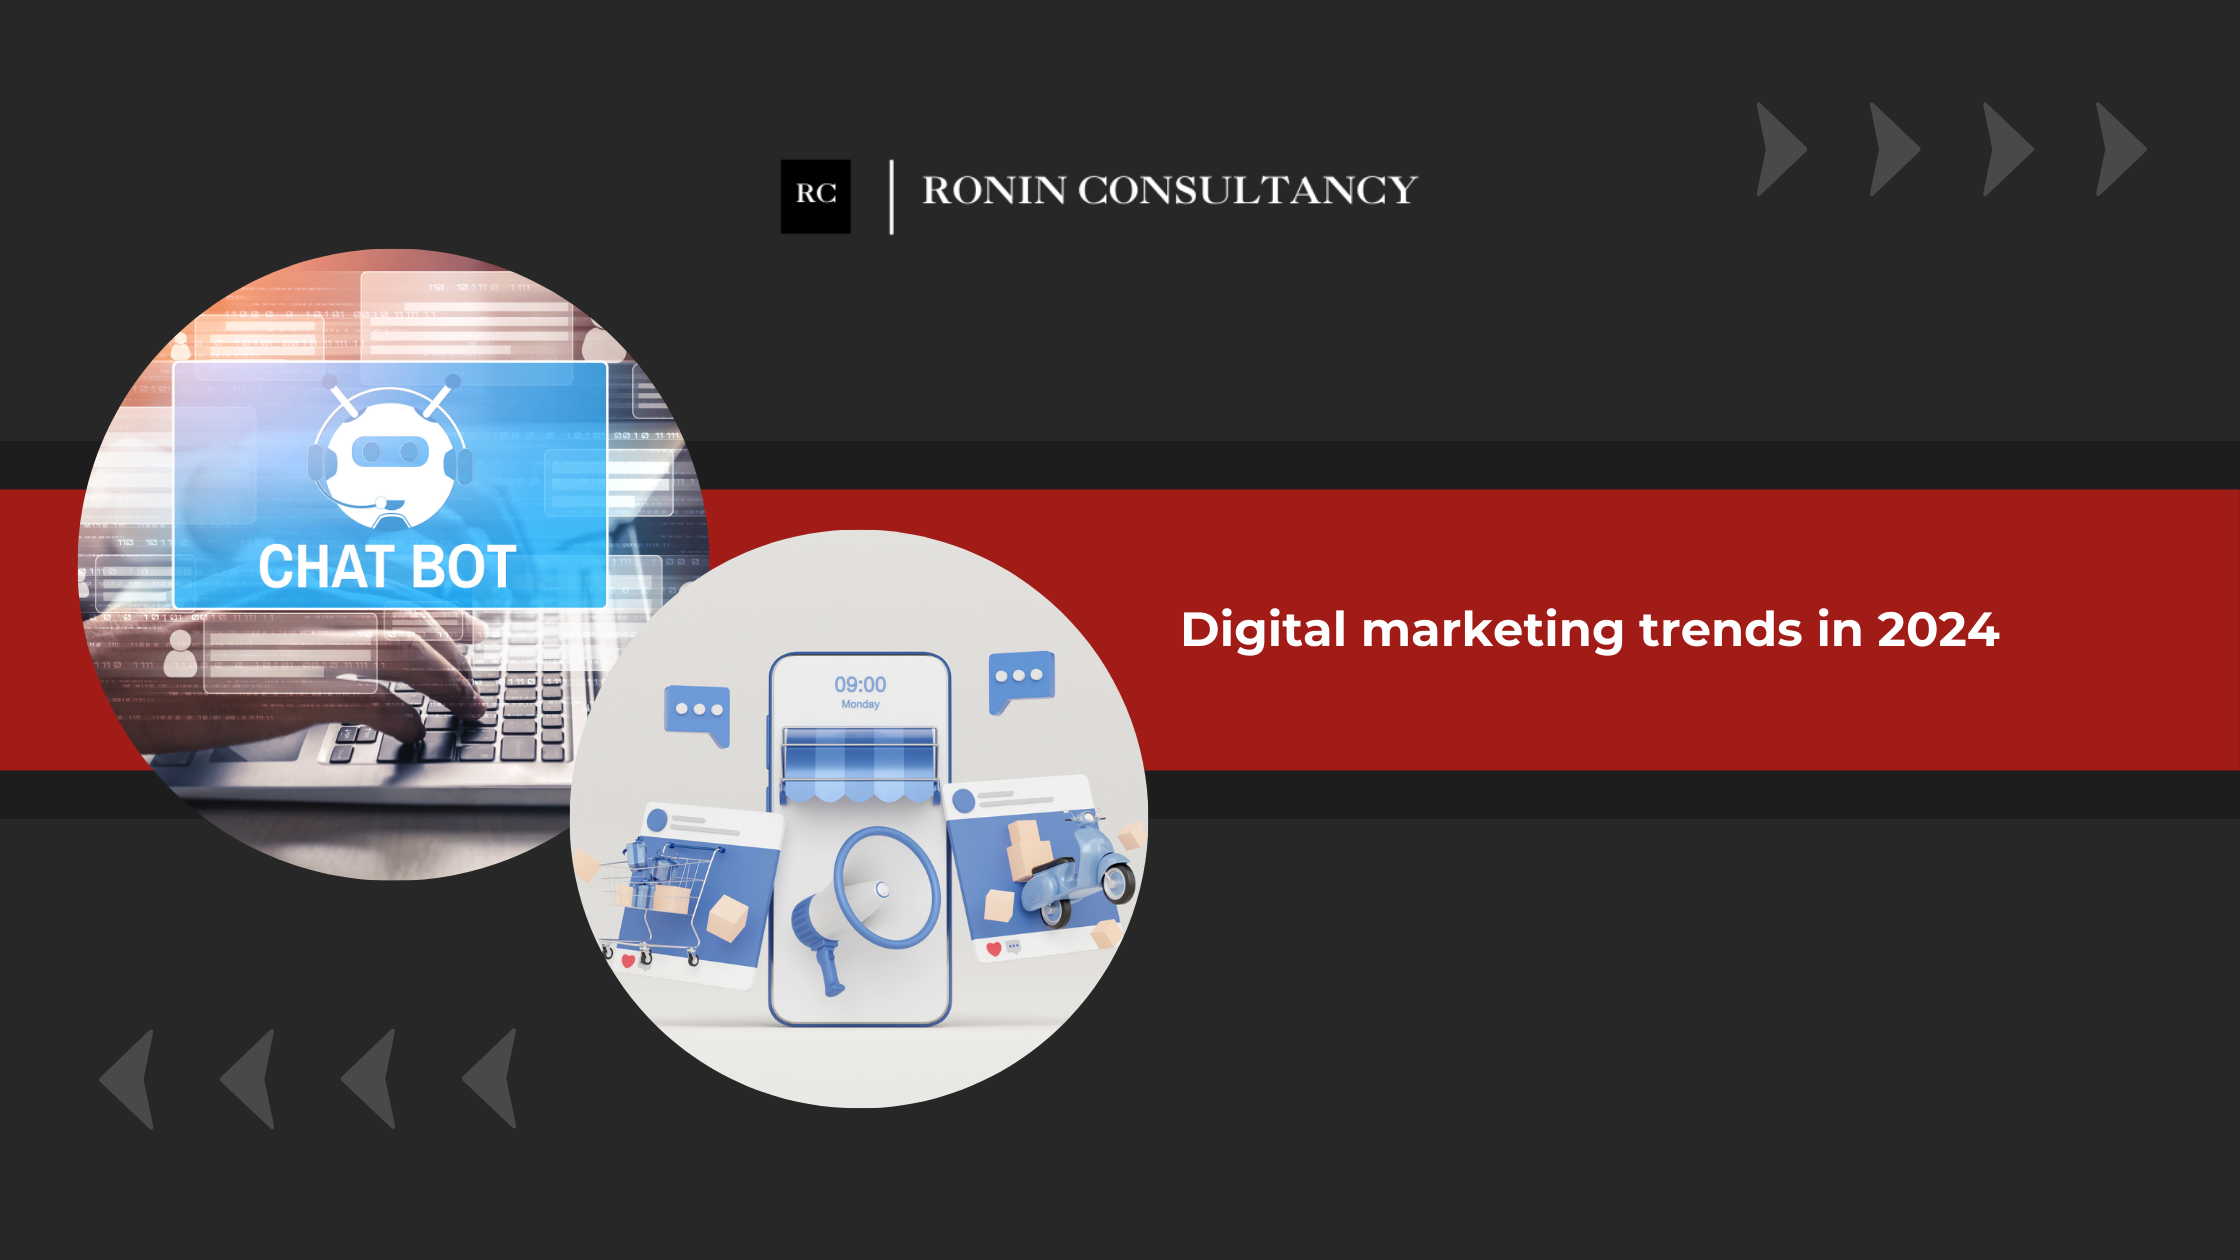 Digital Marketing trends in 2024